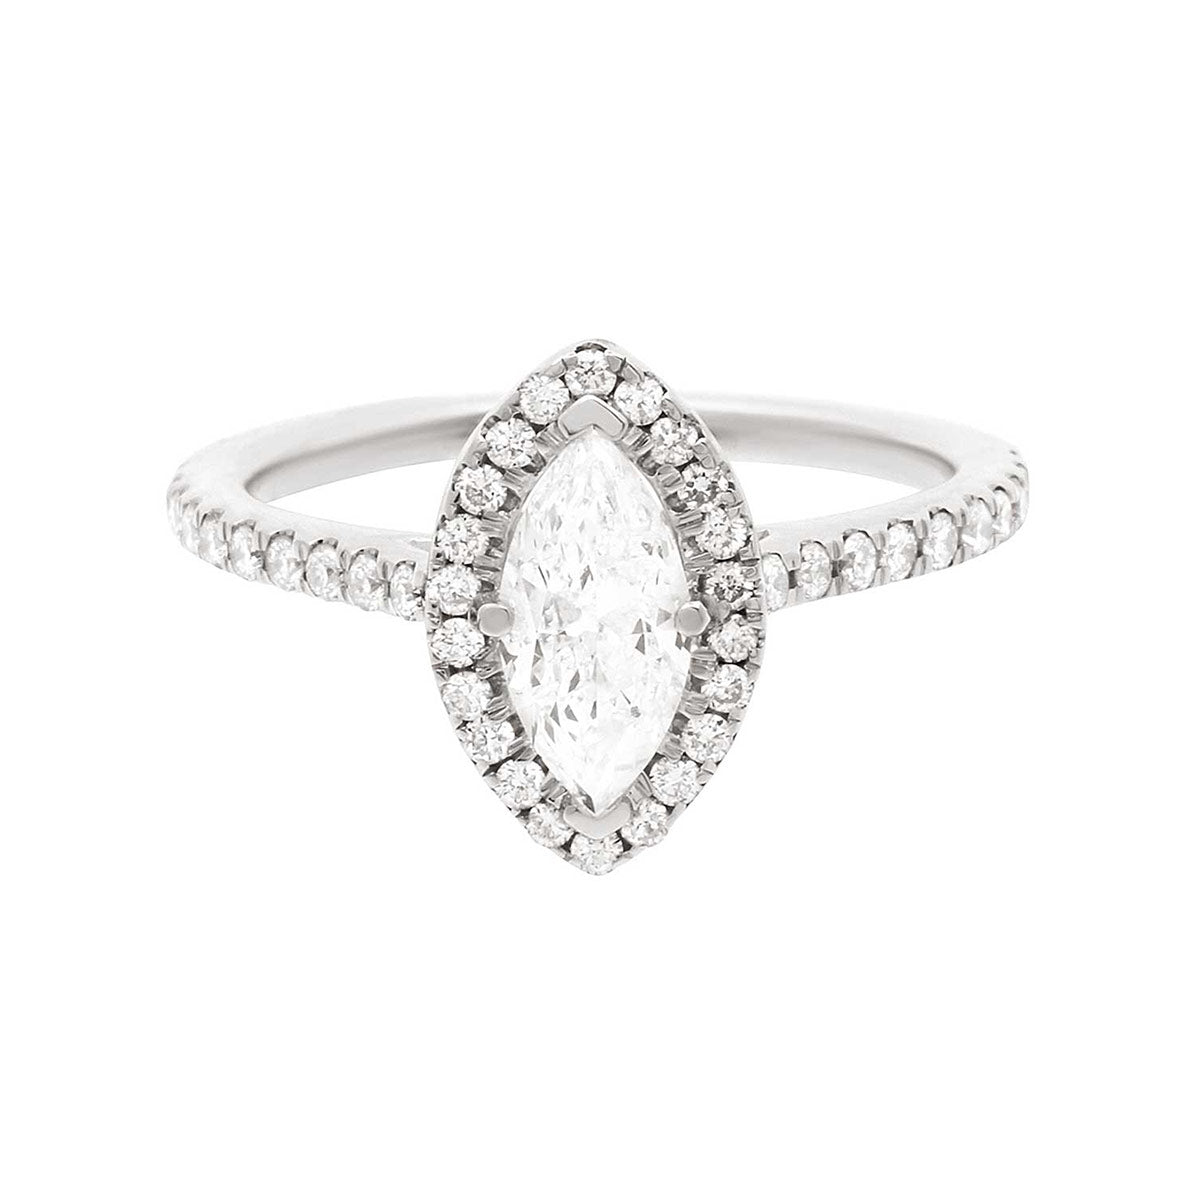 Marquise Halo Engagement Ring in platinum